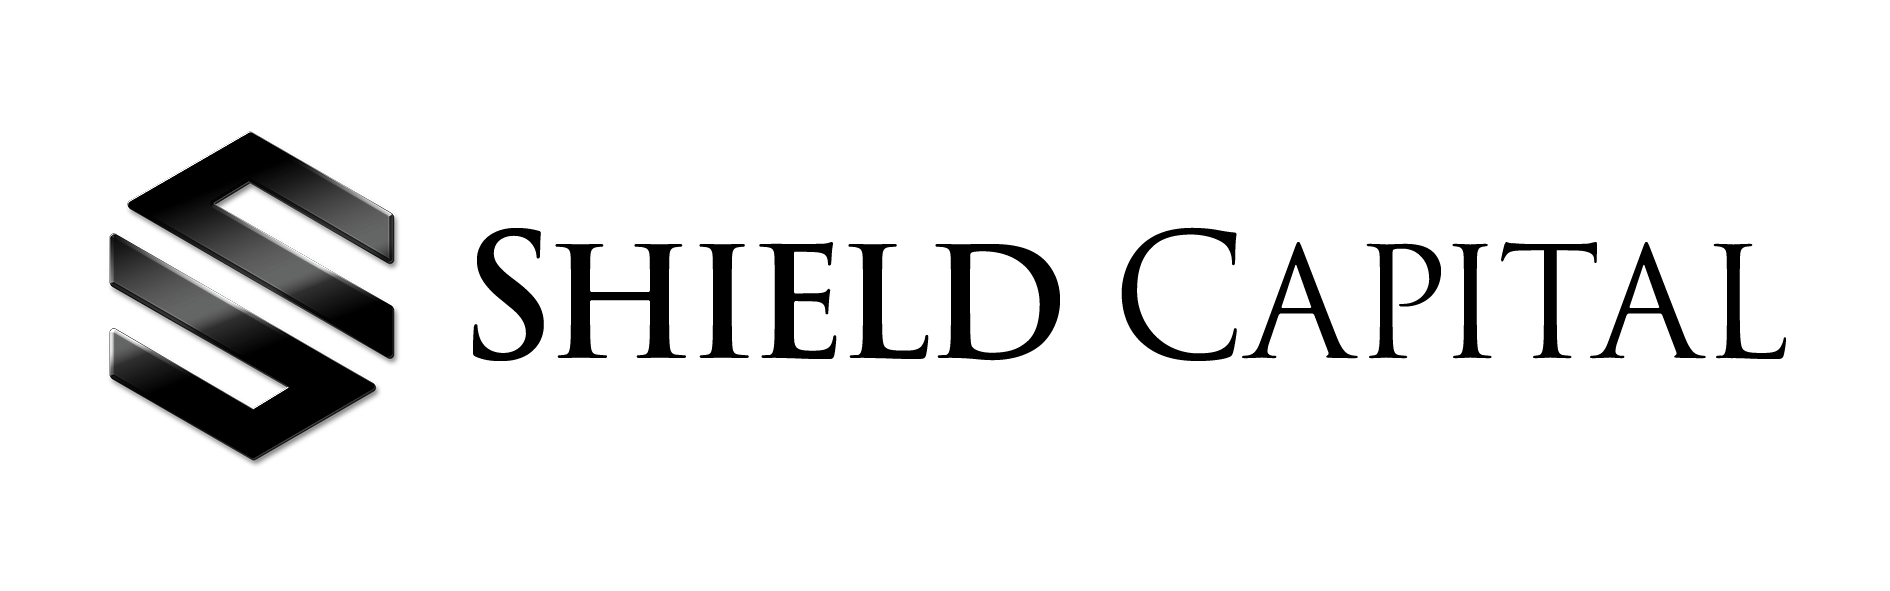 CS3876_Shield Capital_Logo_Final